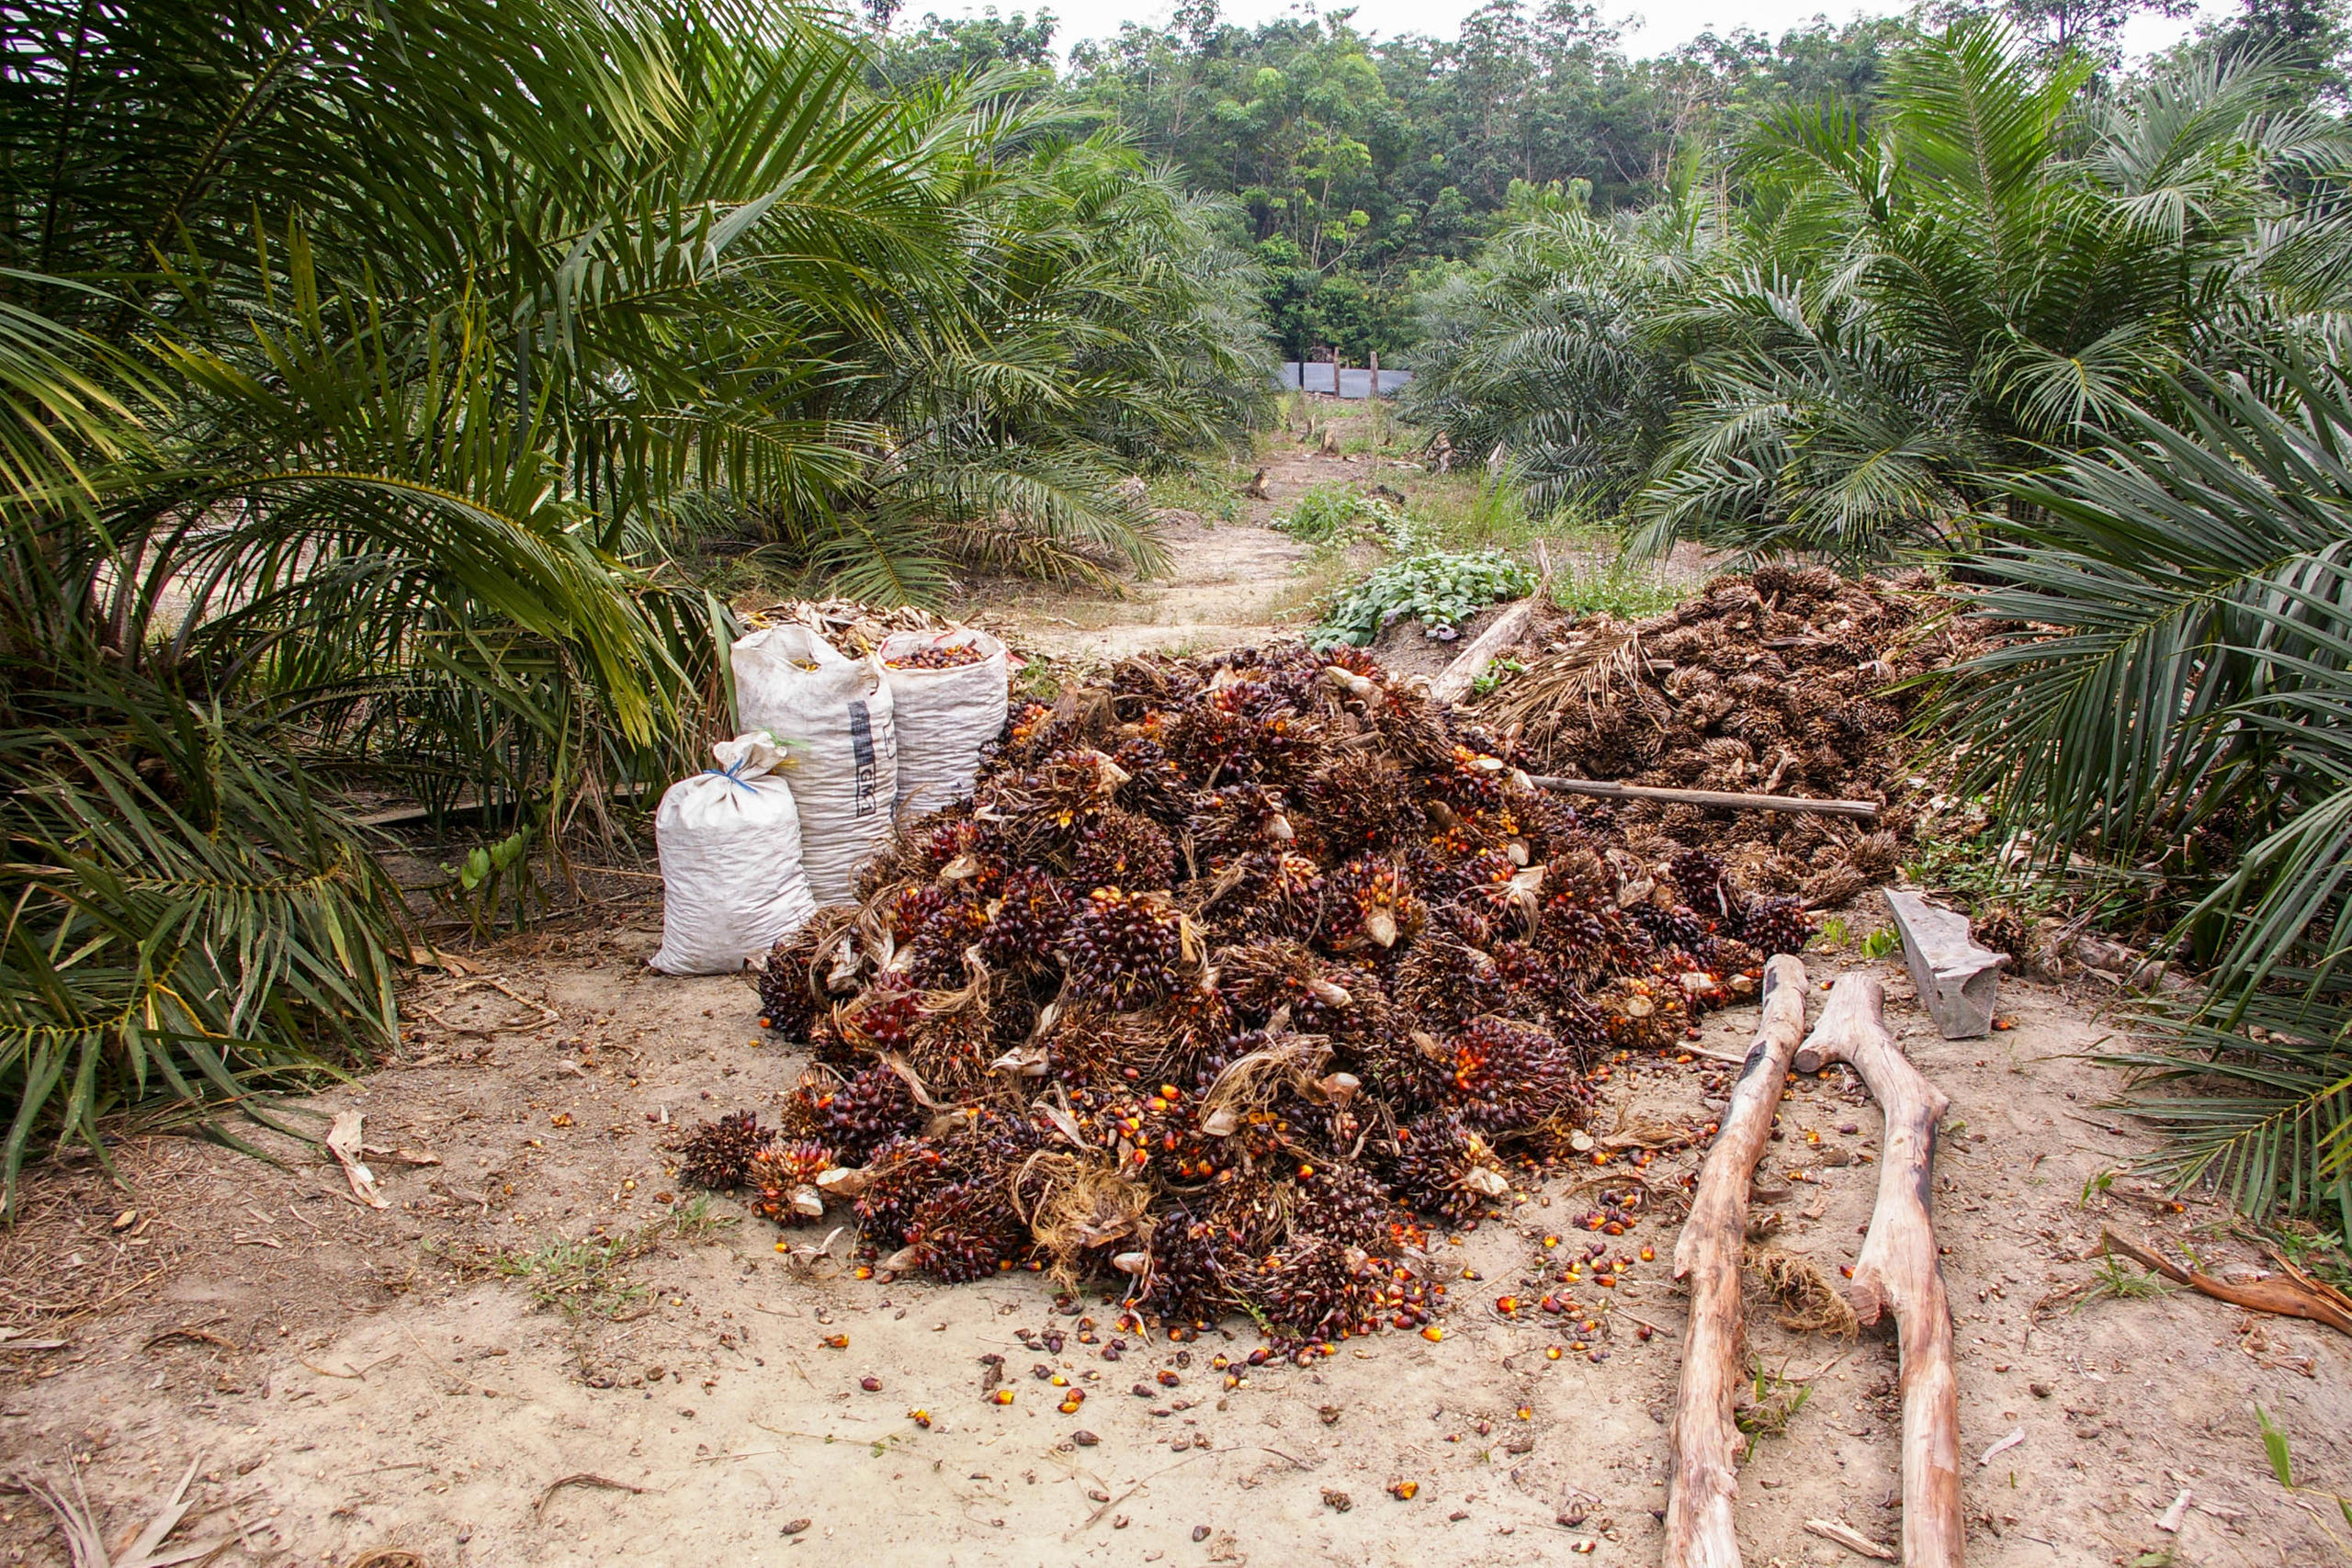 Harvest of palm oil fruits.